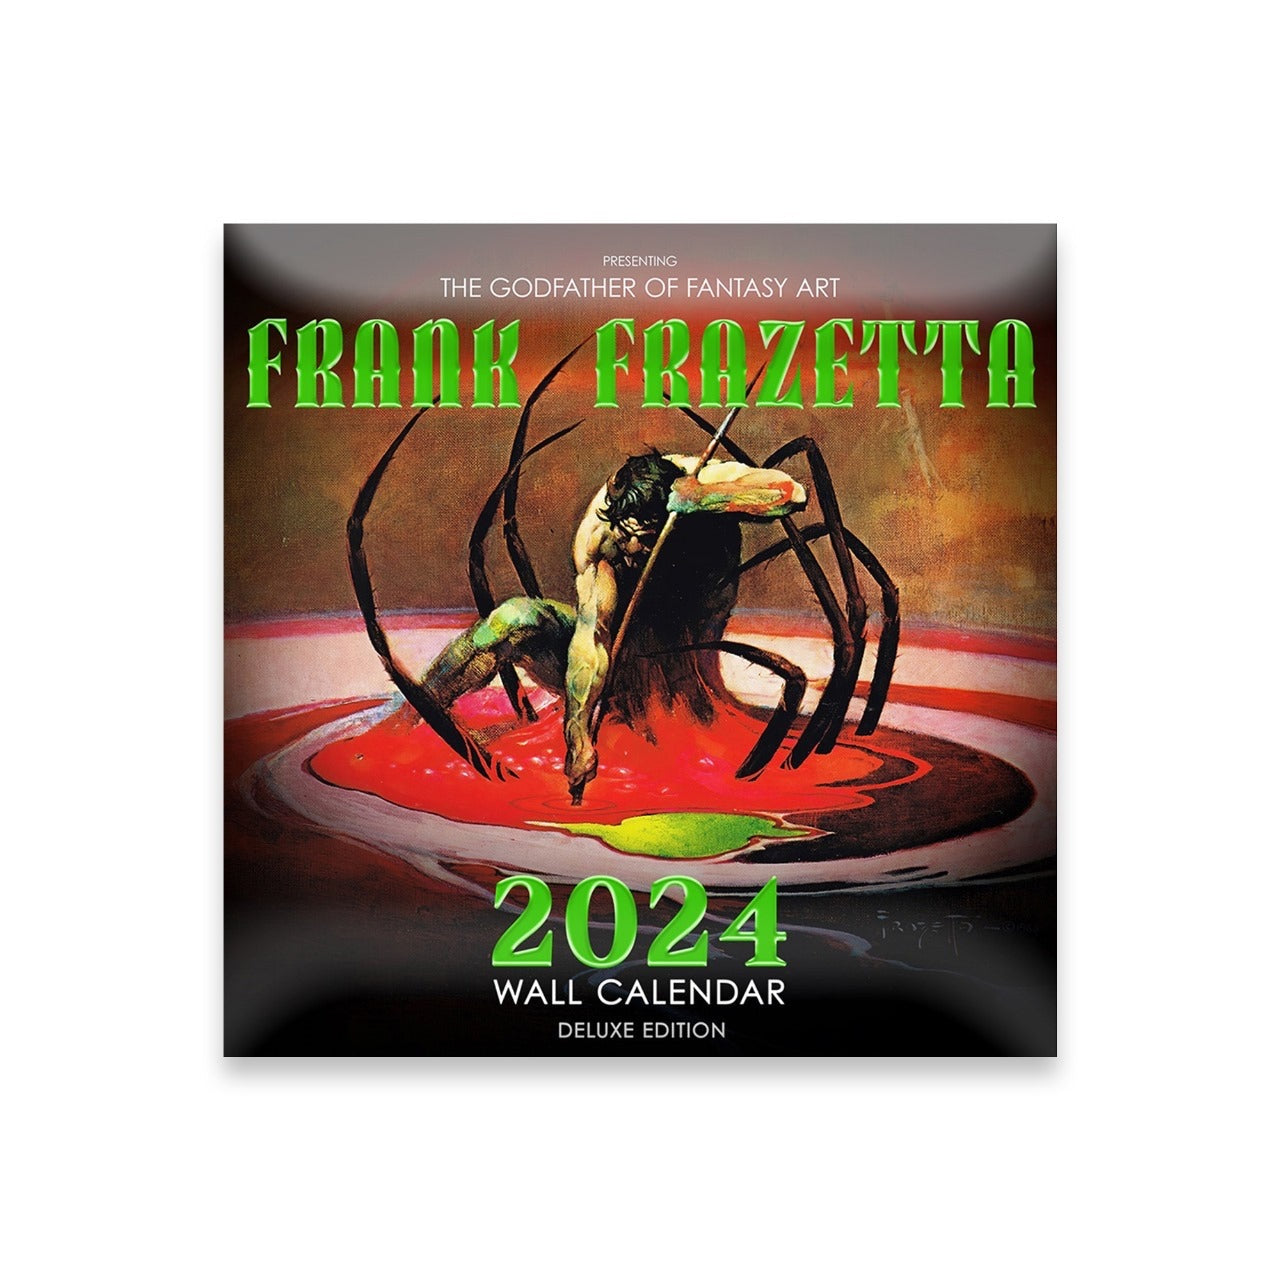 Frank Frazetta 2024 Wall Calendar (Limited Collector’s Edition